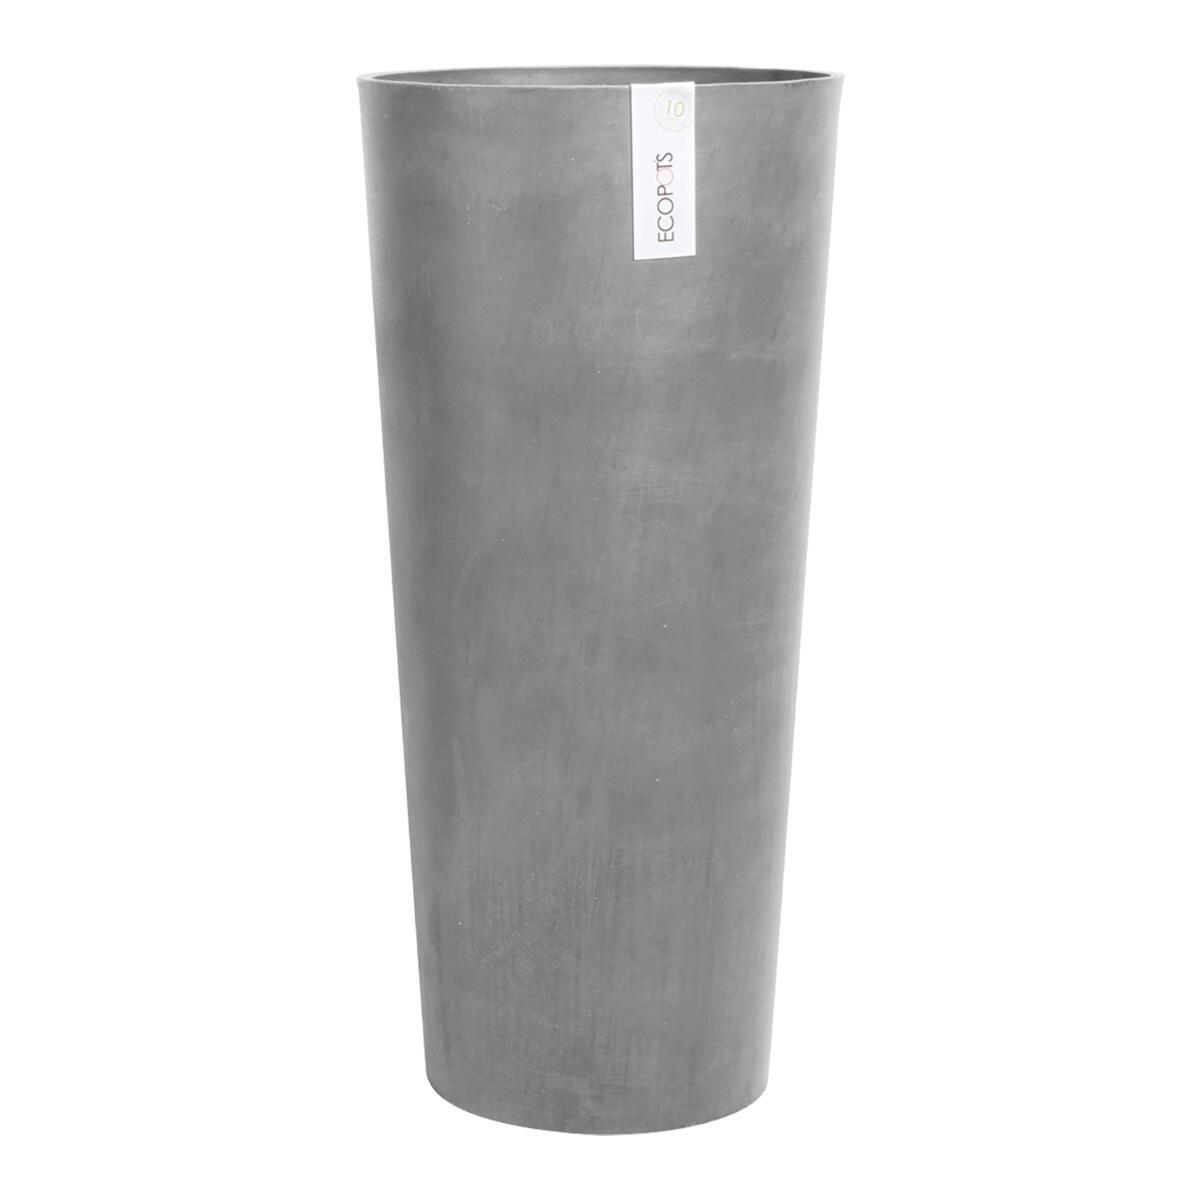 Vaso Amsterdam ECOPOTS in composito colore grey H 70 cm, Ø 32 cm - 1